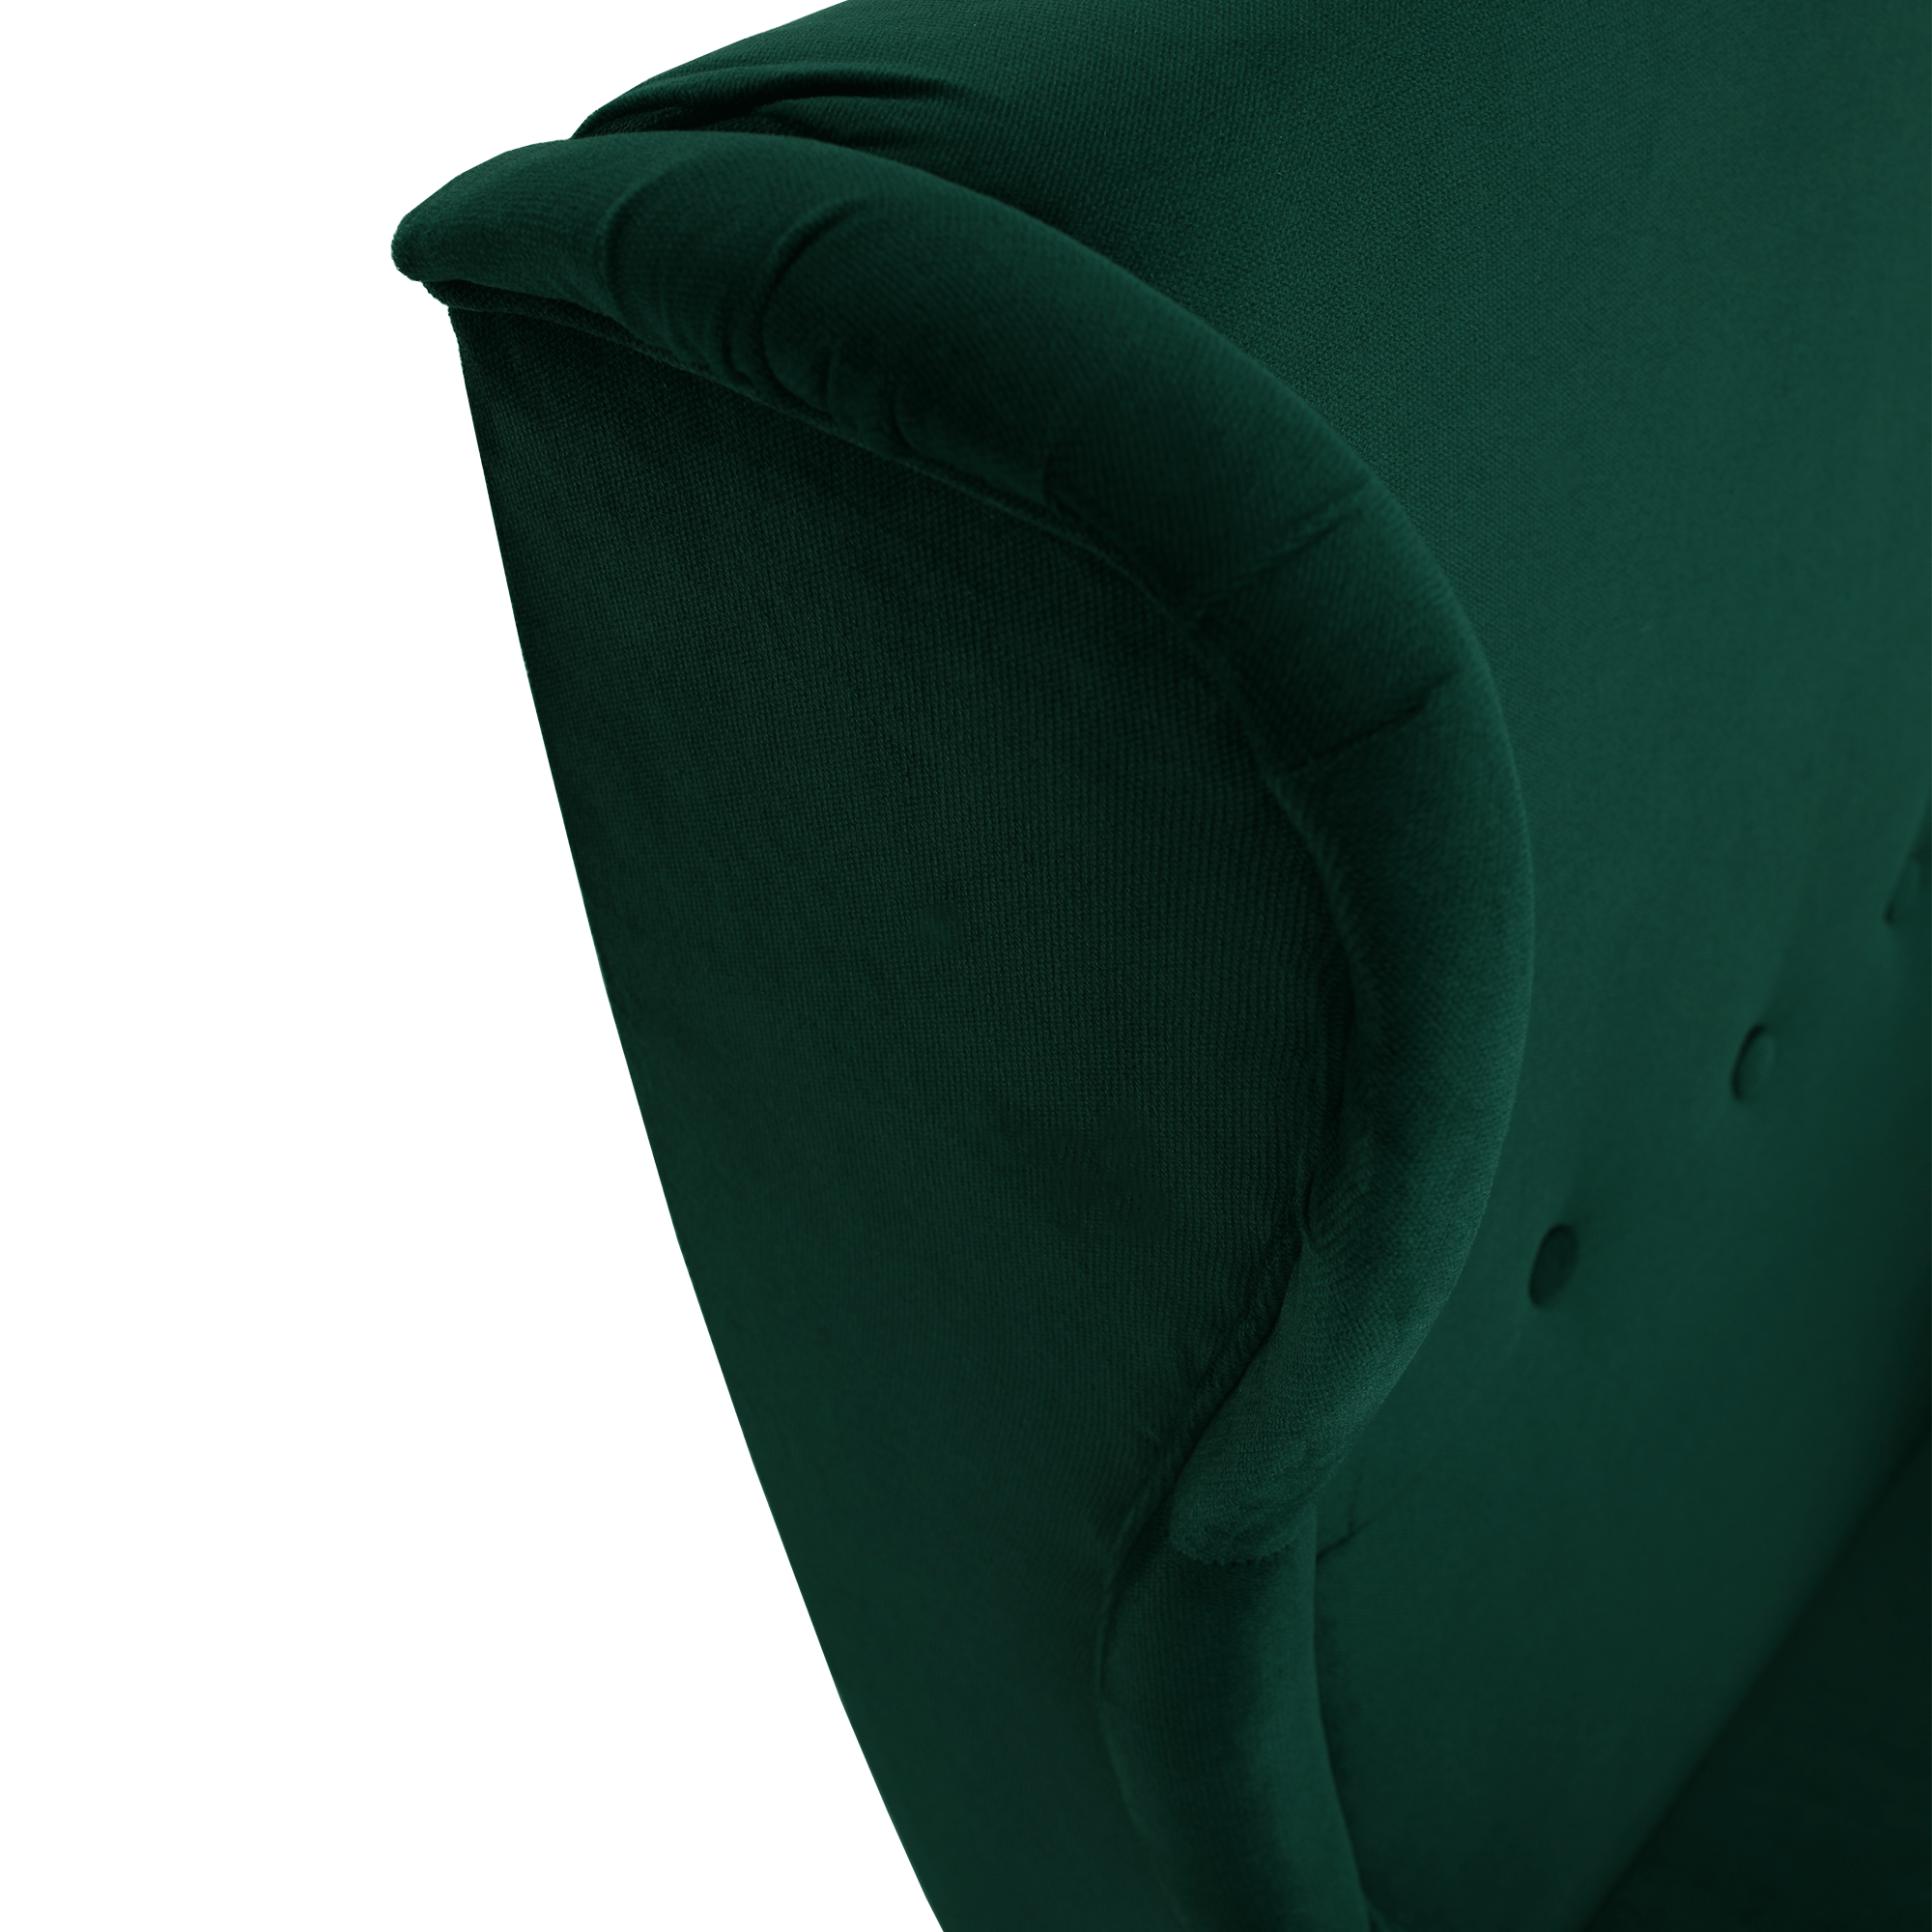 Füles fotel, zöld/dió, RUFINO